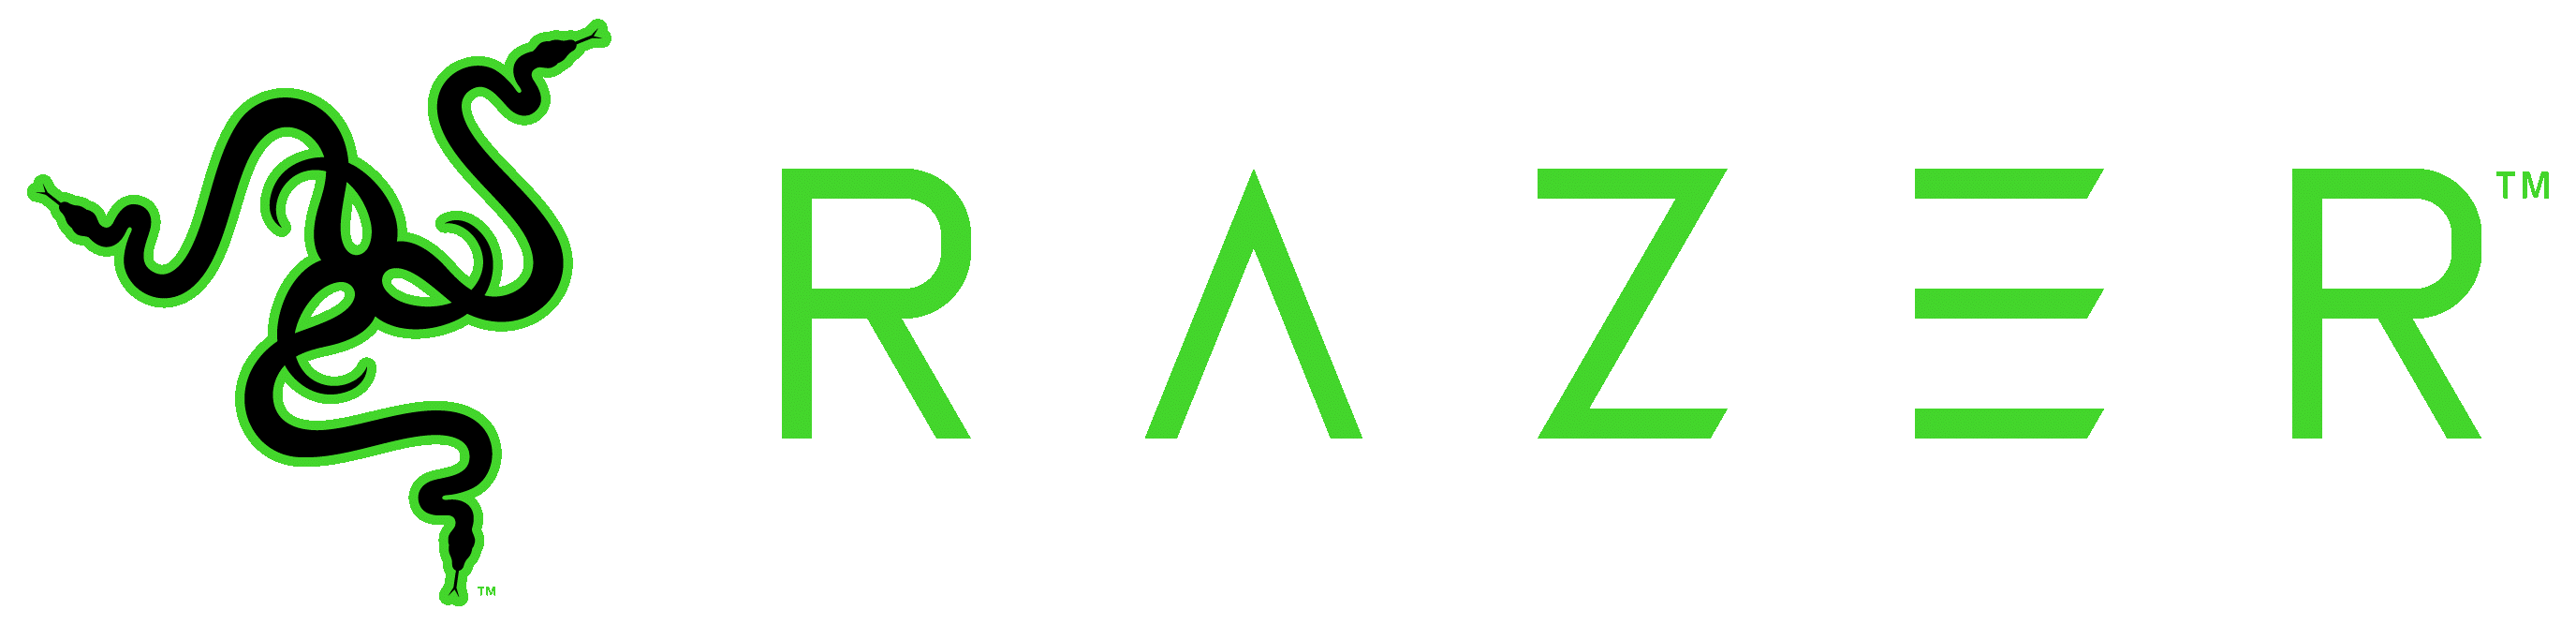 Il logo Razer.